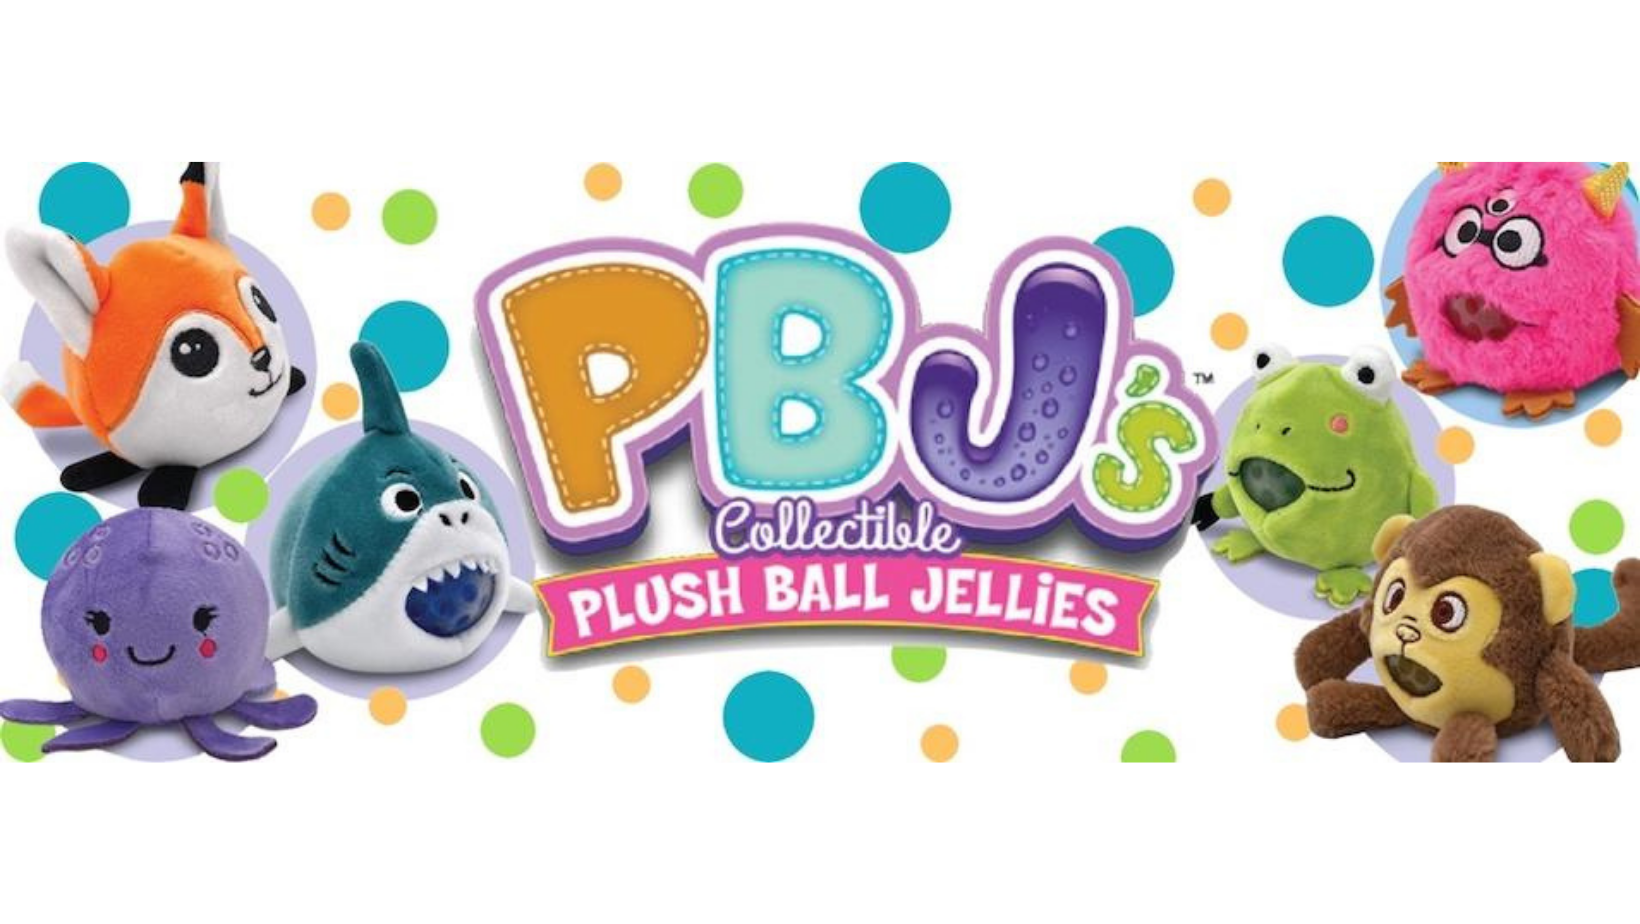 PBJ Plush Ball Jellies